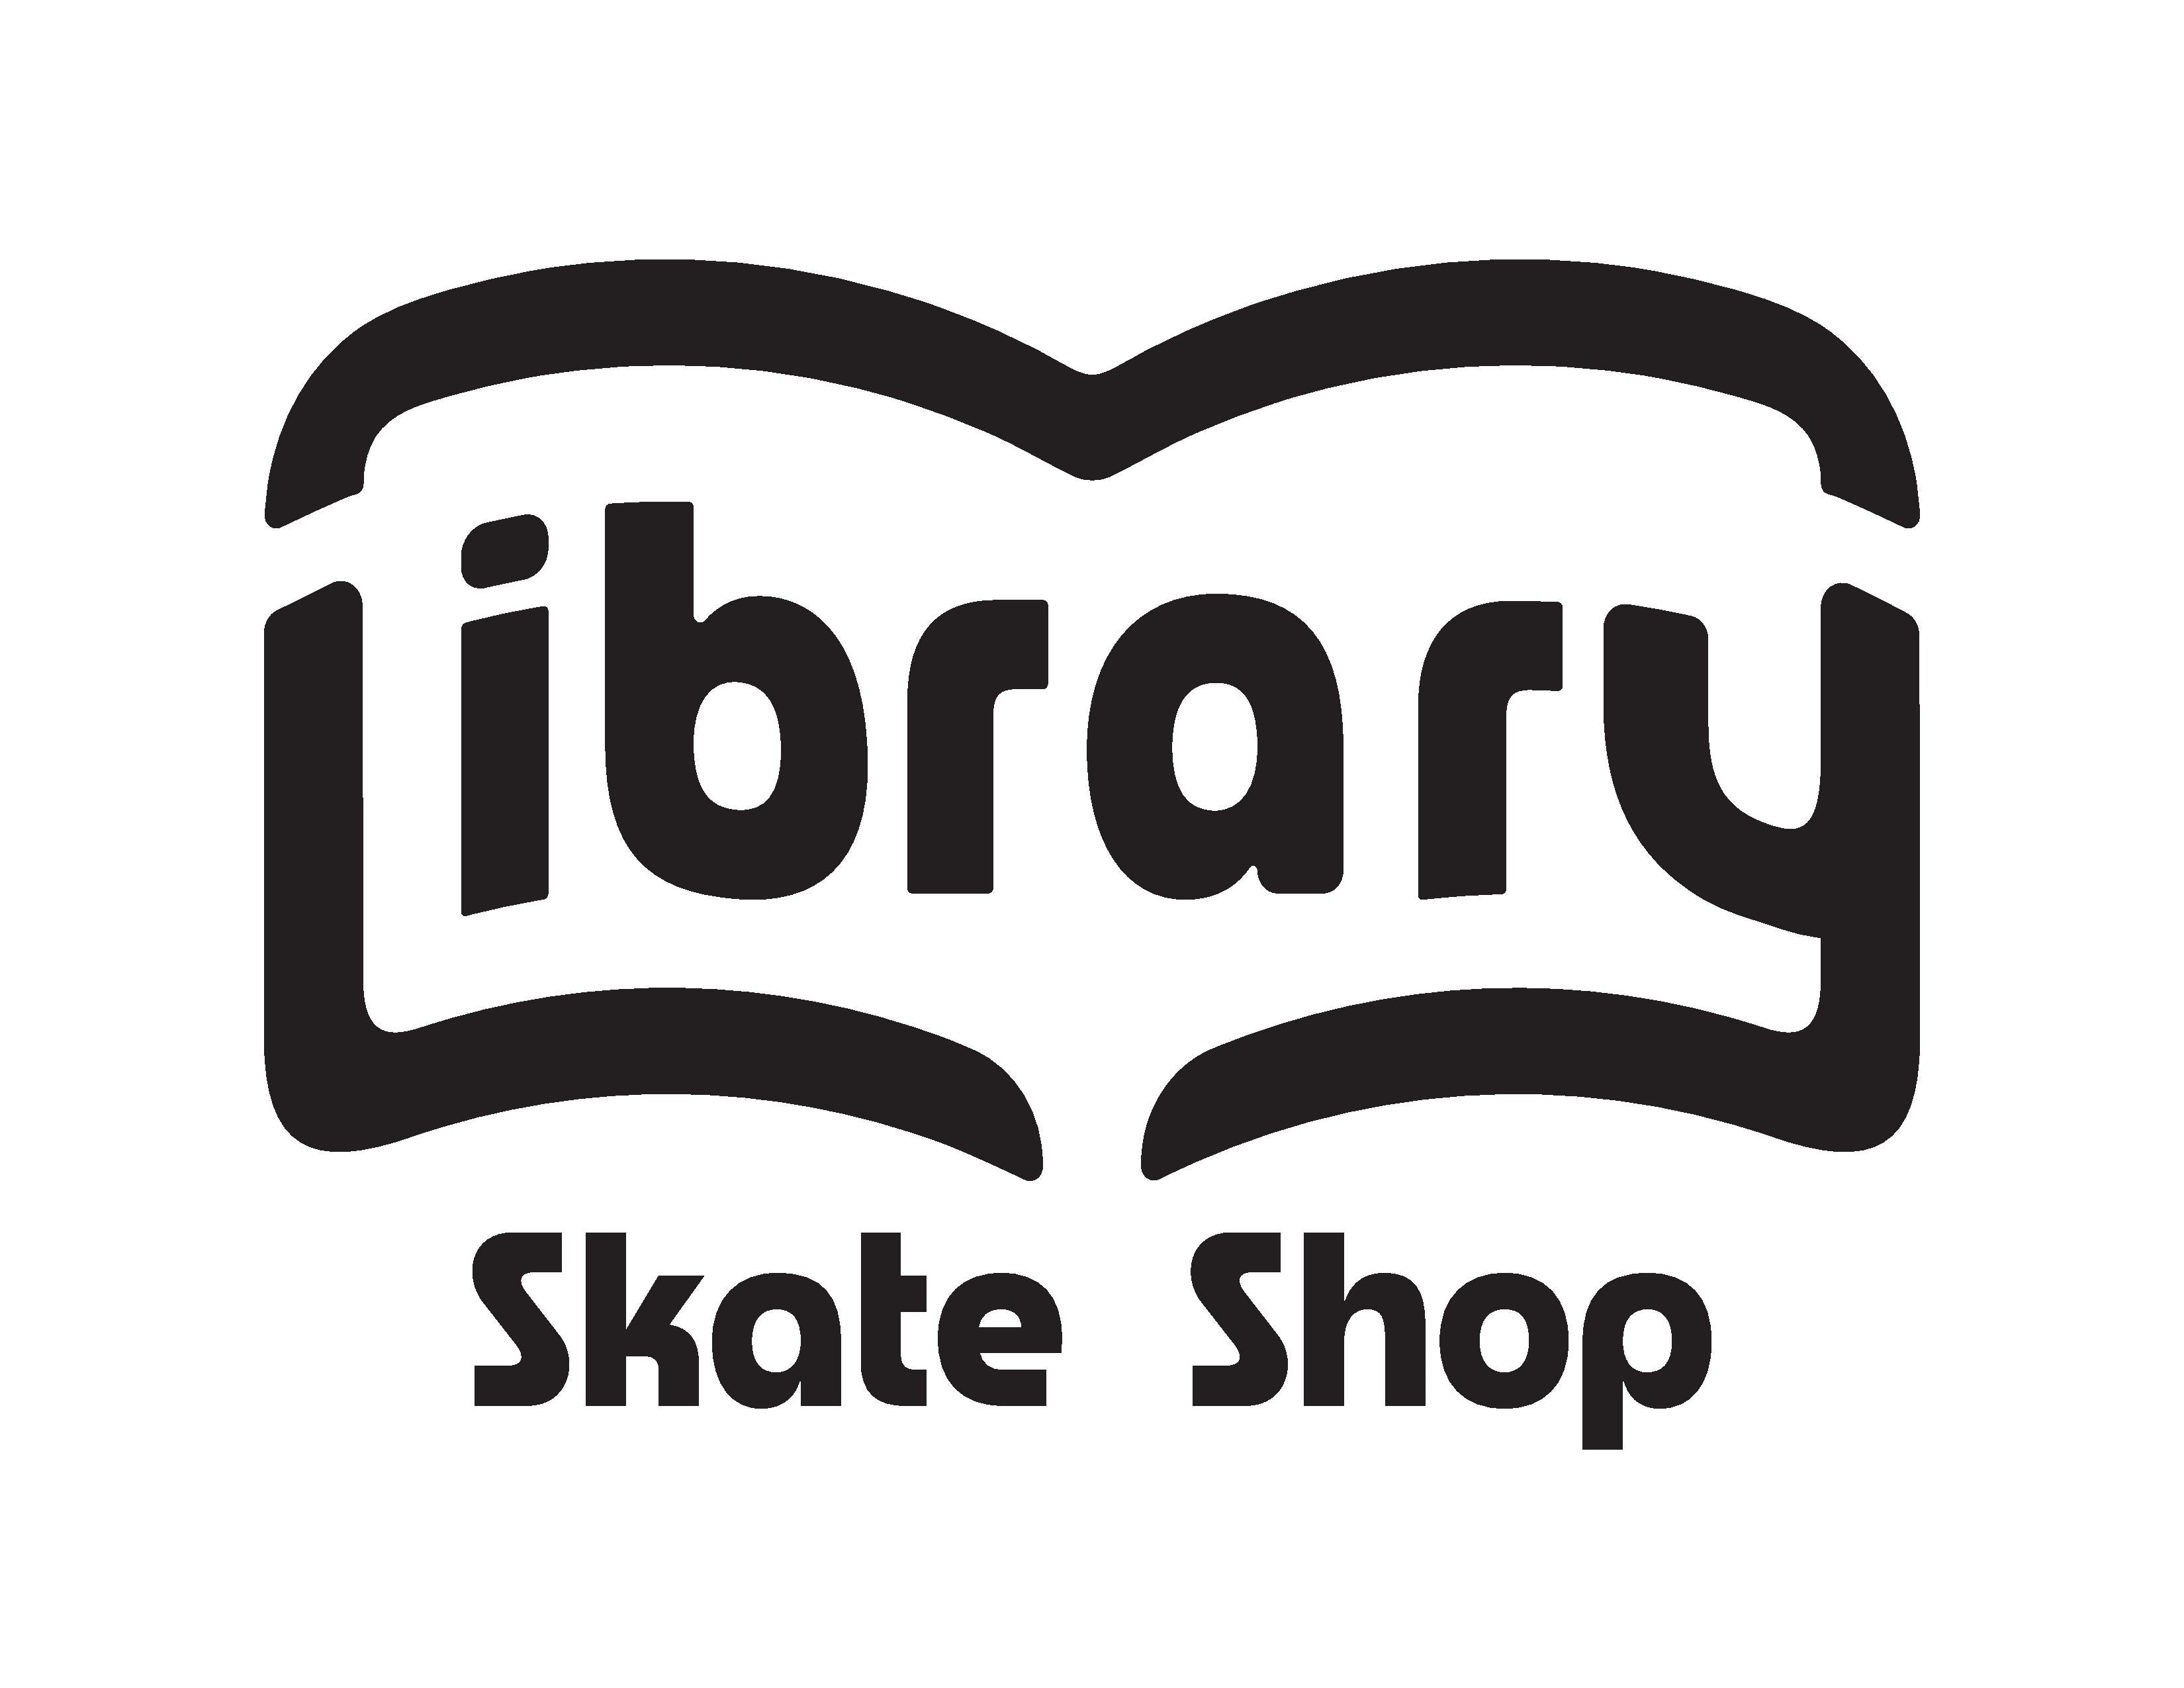 Library Skate Shop